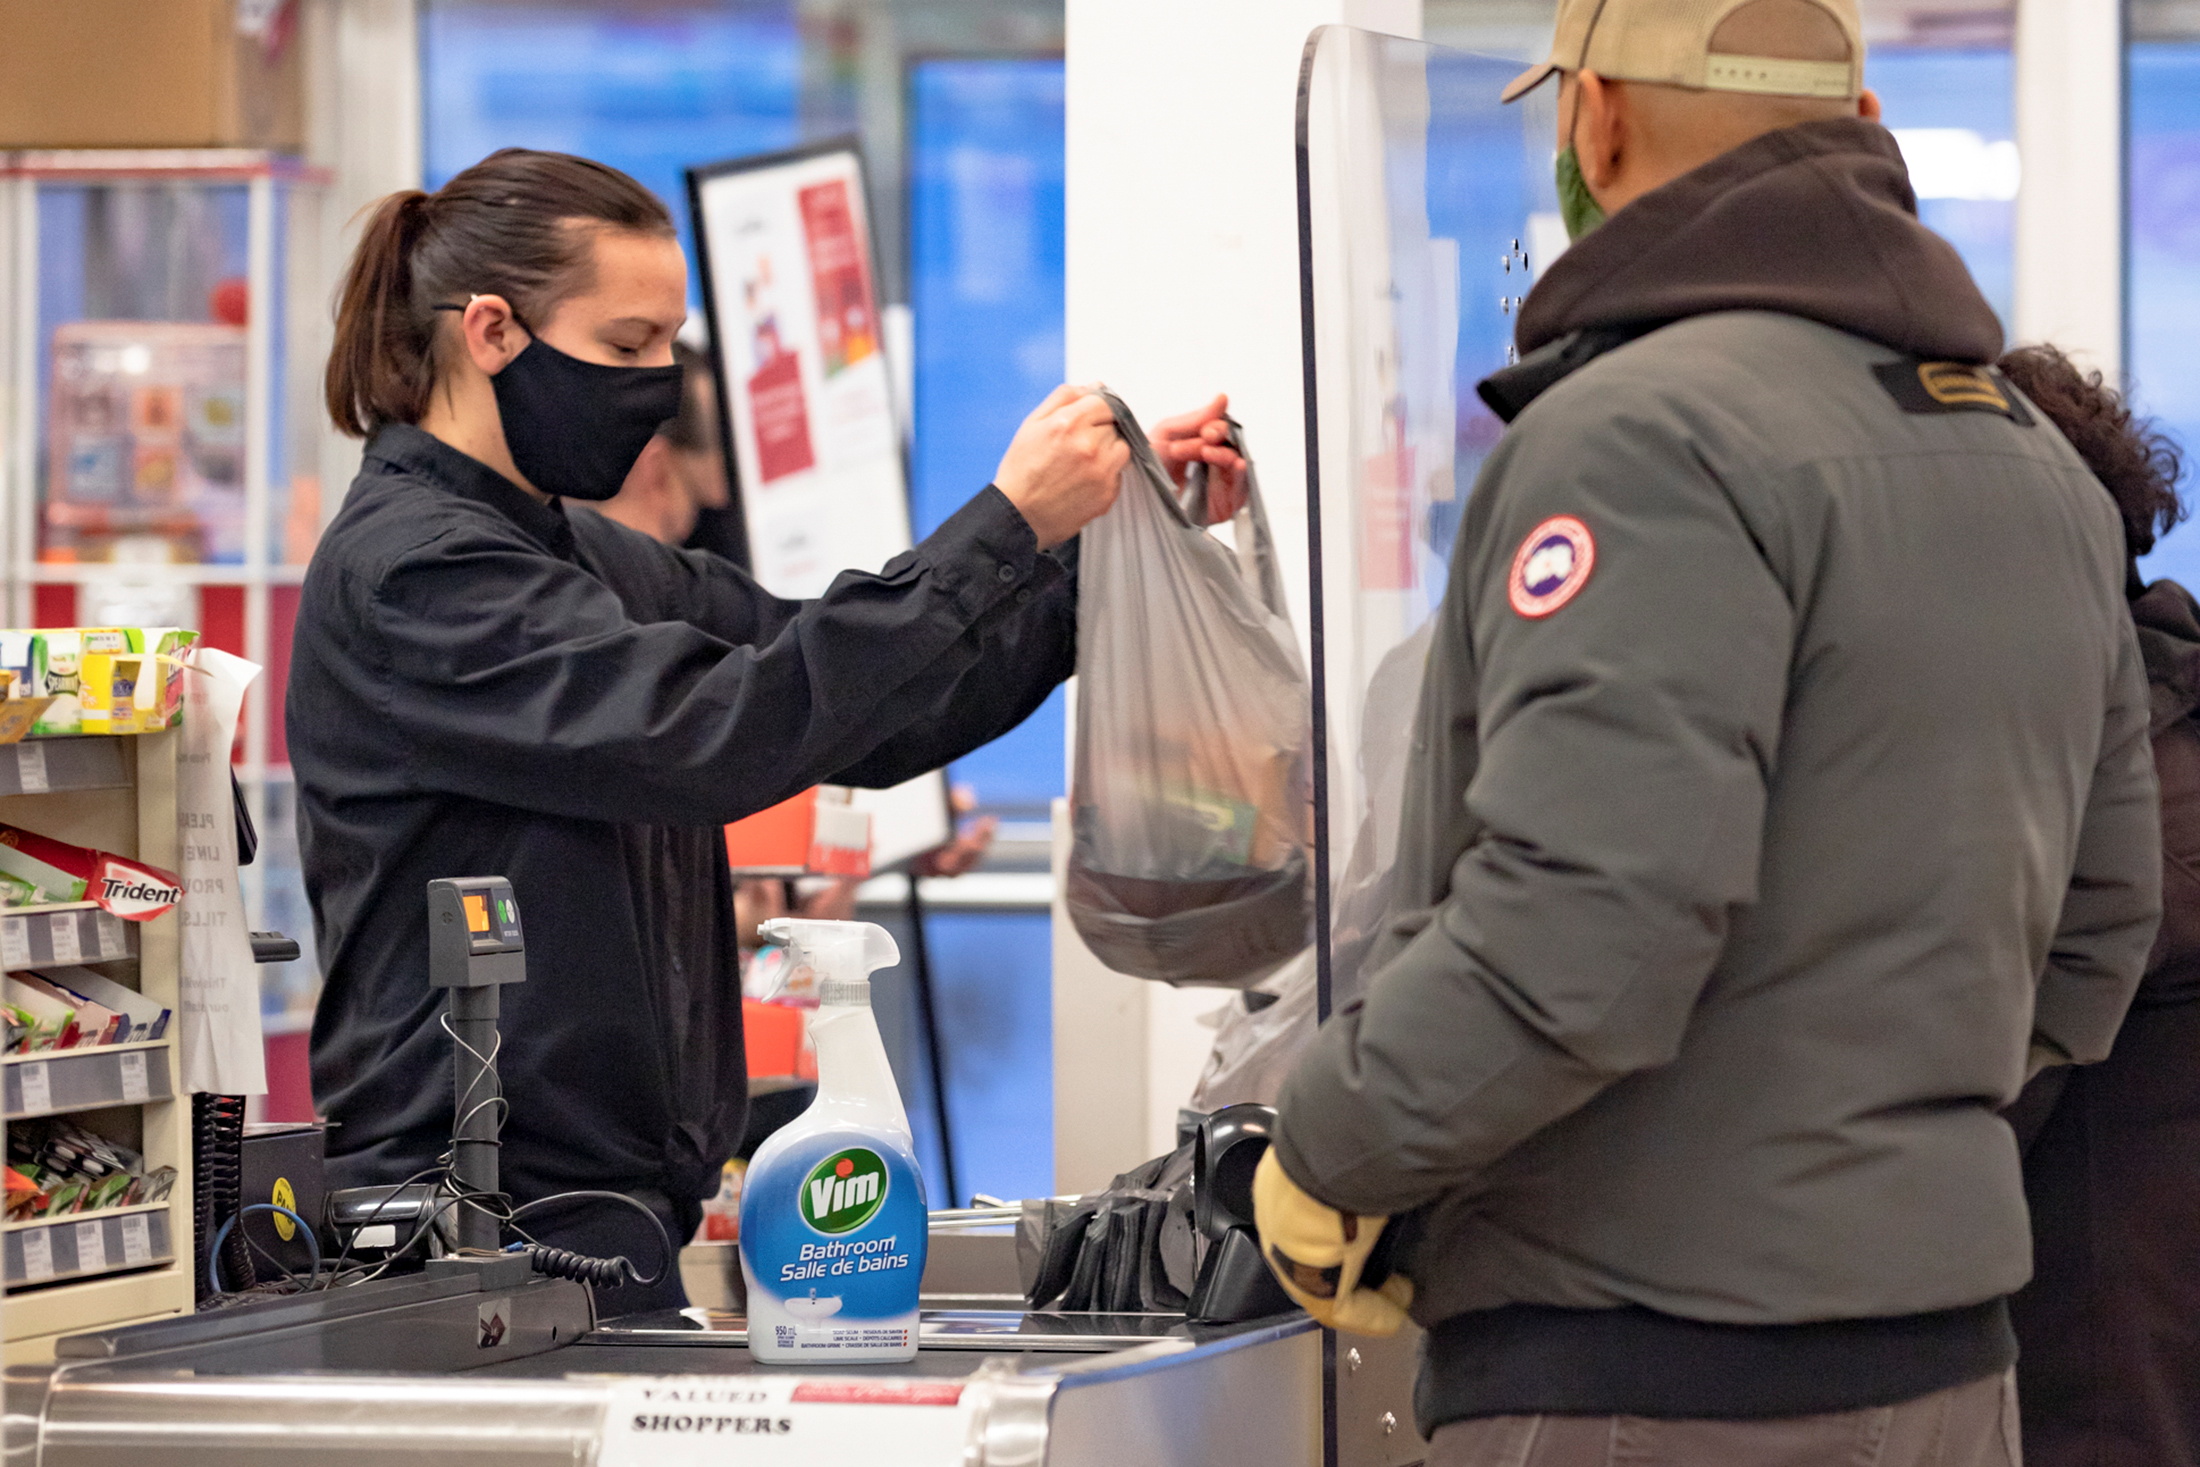 People wear masks to help slow the spread of coronavirus disease in Iqaluit